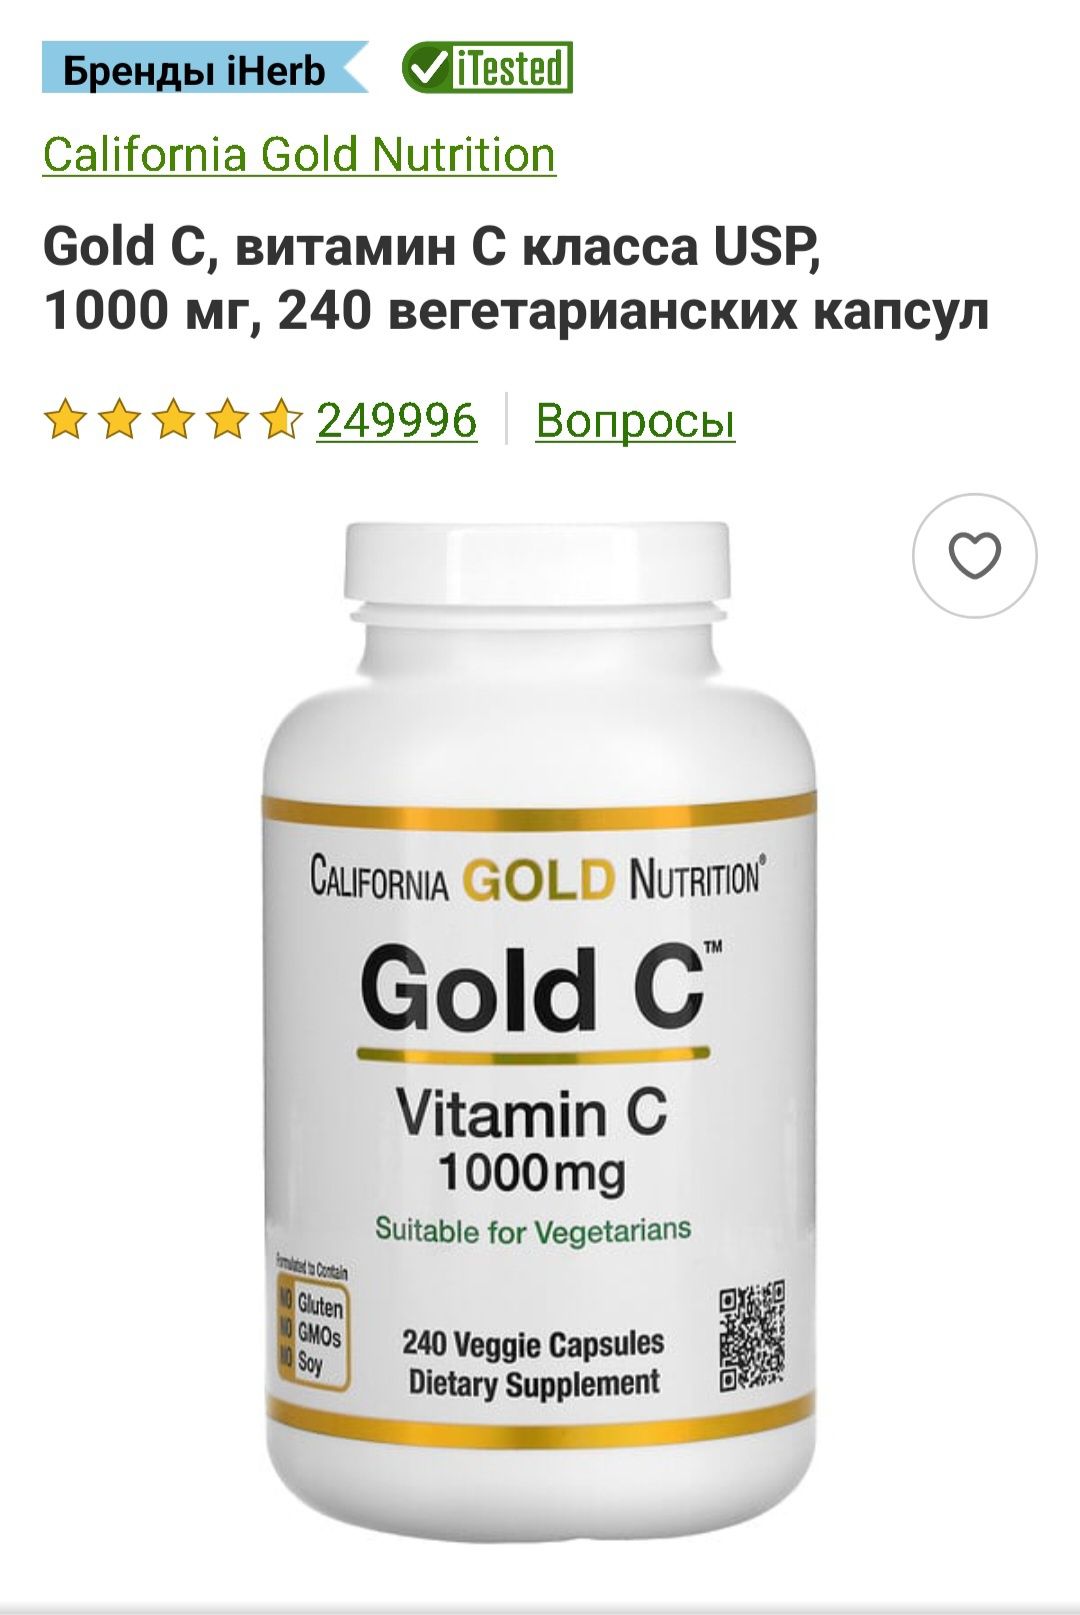 Gold C, витамин C класса USP, 1000 мг, 240 вегетарианских капсул